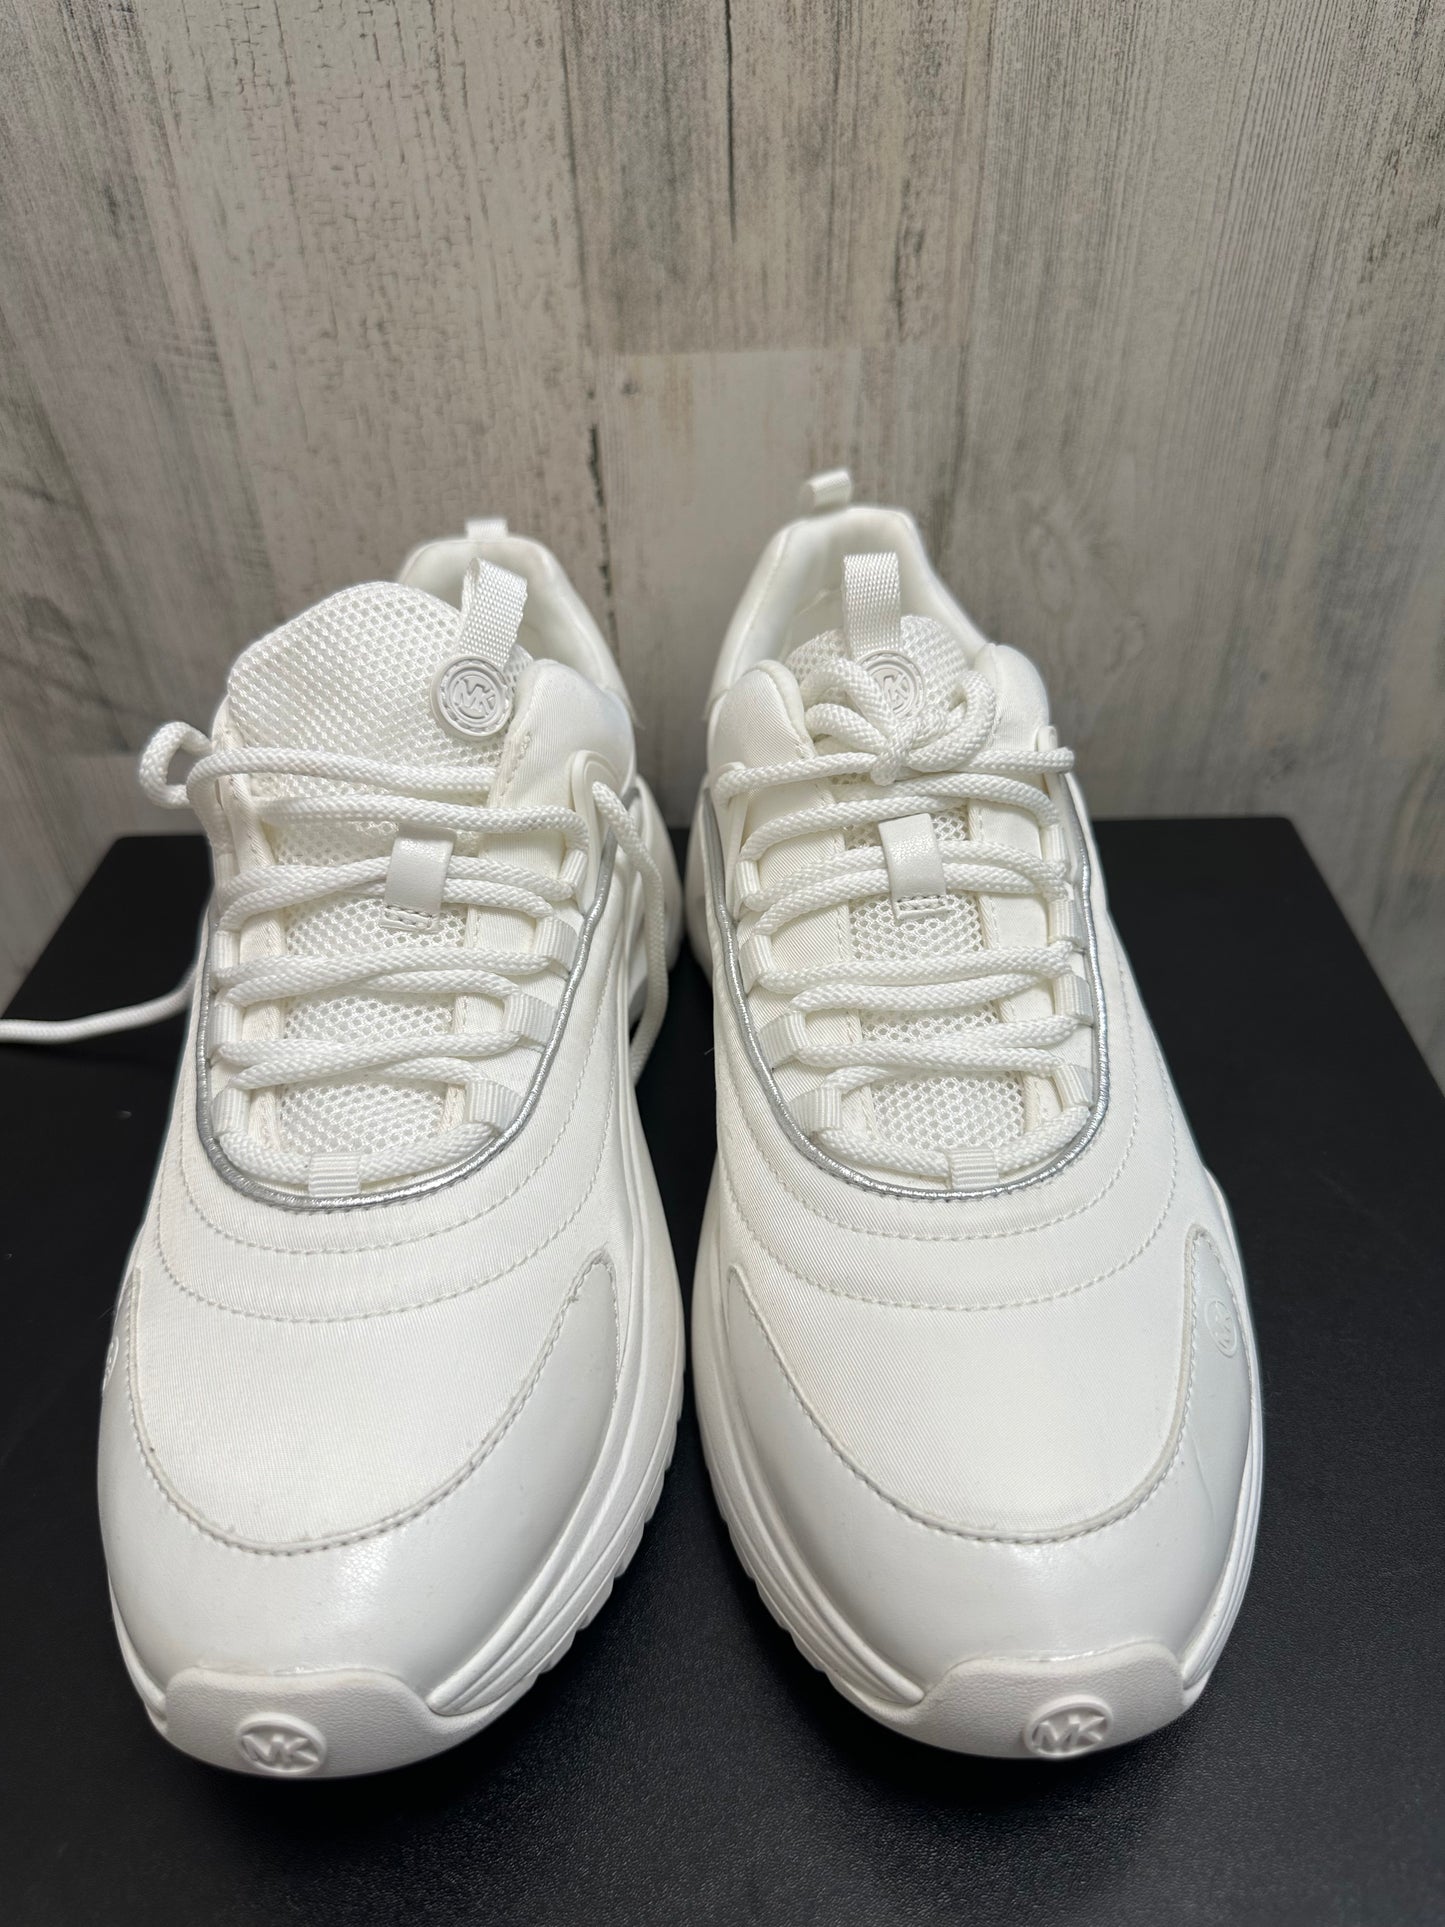 Shoes Designer By Michael Kors  Size: 9.5